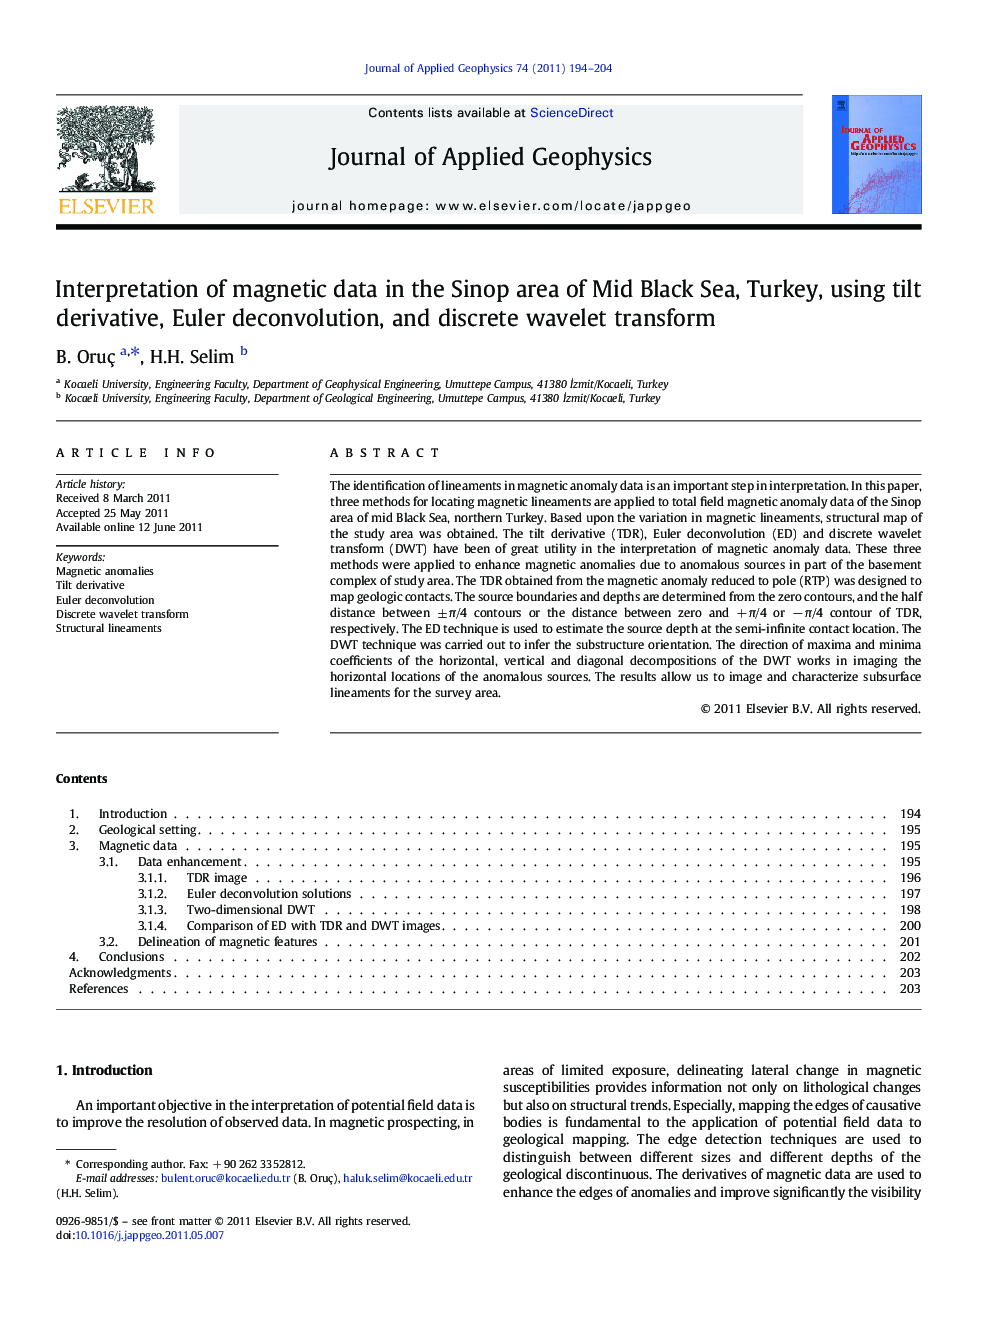 Interpretation of magnetic data in the Sinop area of Mid Black Sea, Turkey, using tilt derivative, Euler deconvolution, and discrete wavelet transform